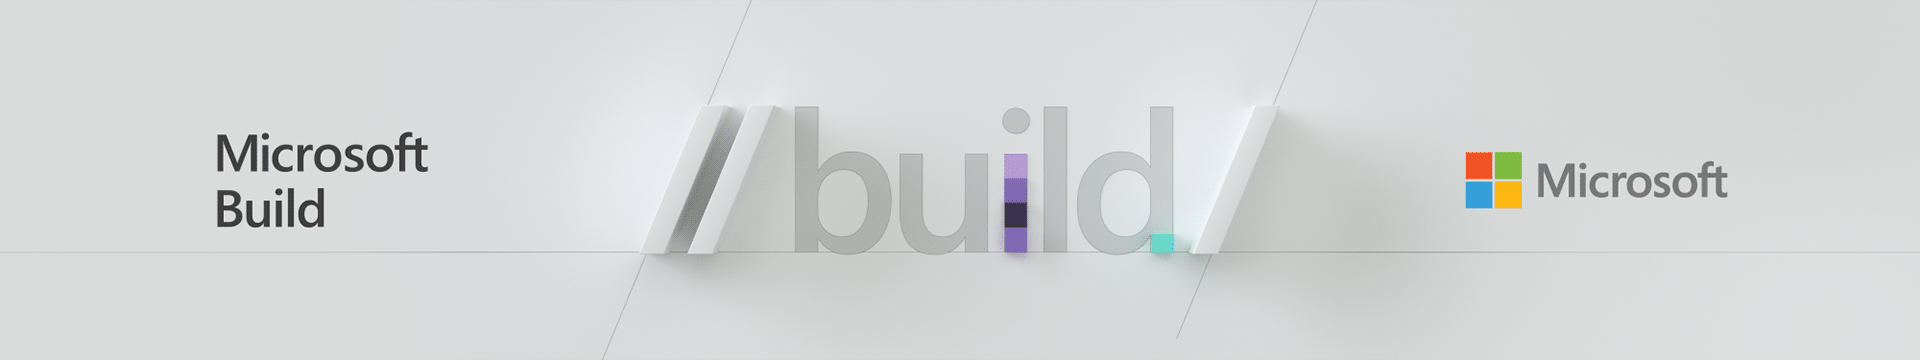 Microsoft Build 2019 Event Open on Behanced1dd2b84844735.5d696e2b9157b.png